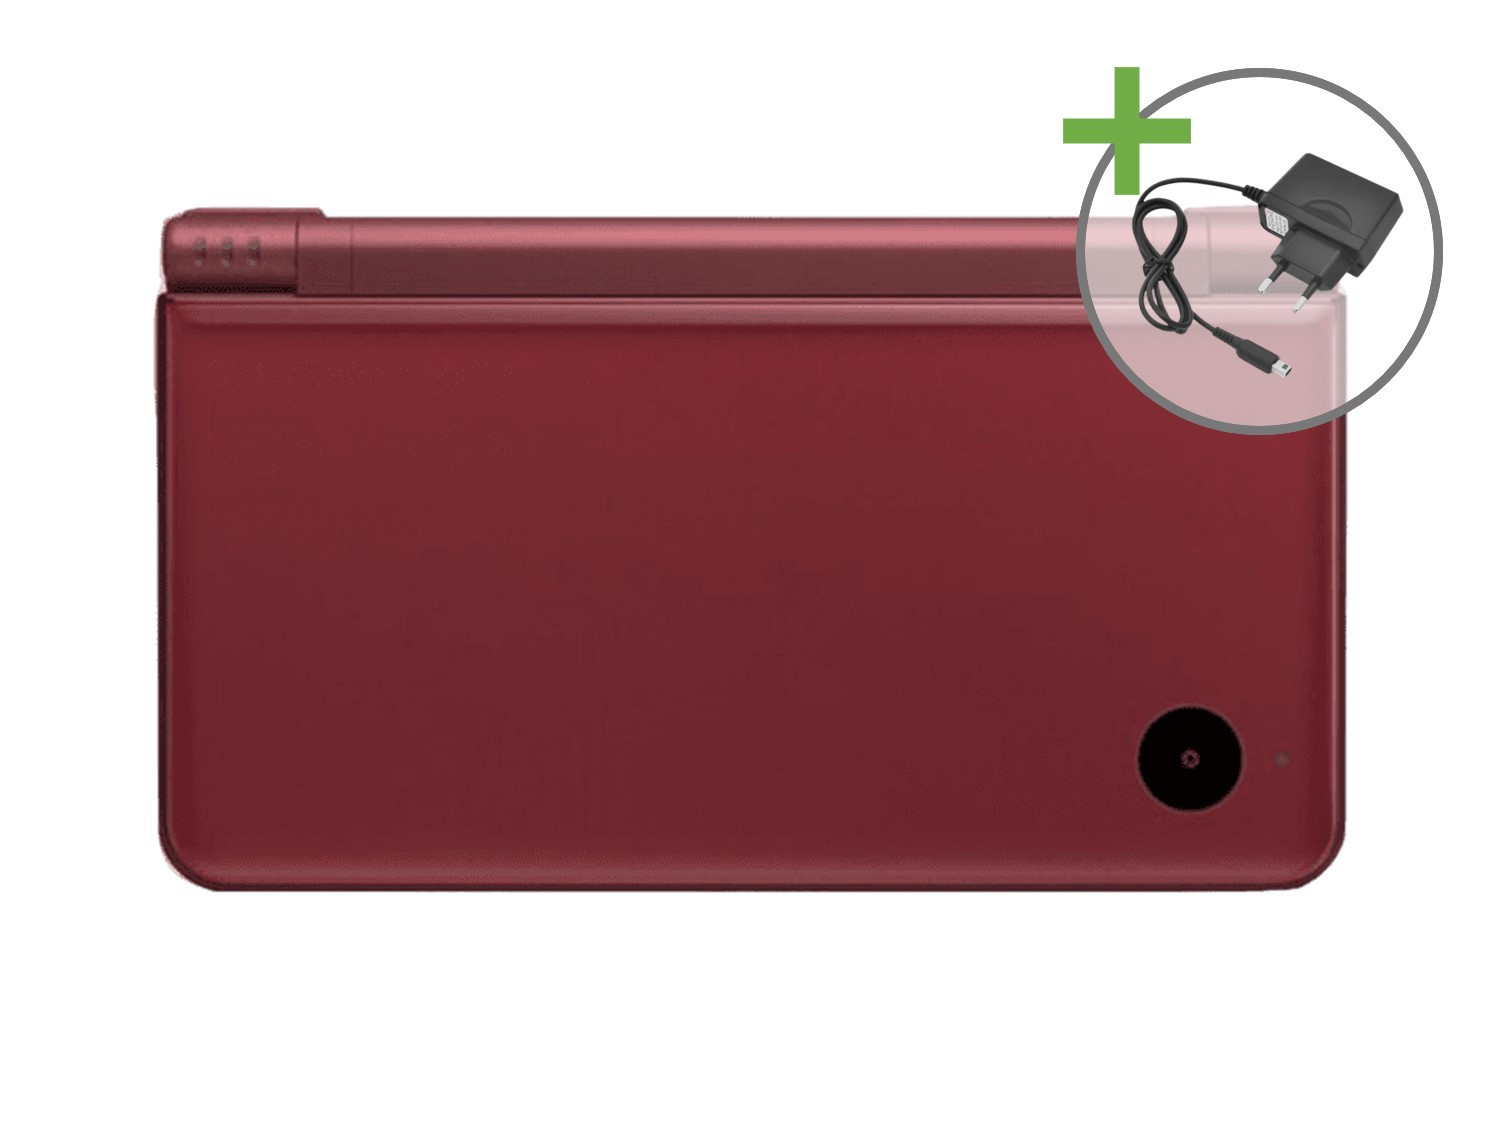 Nintendo DSi XL - Bordeaux Red - Nintendo DS Hardware - 3